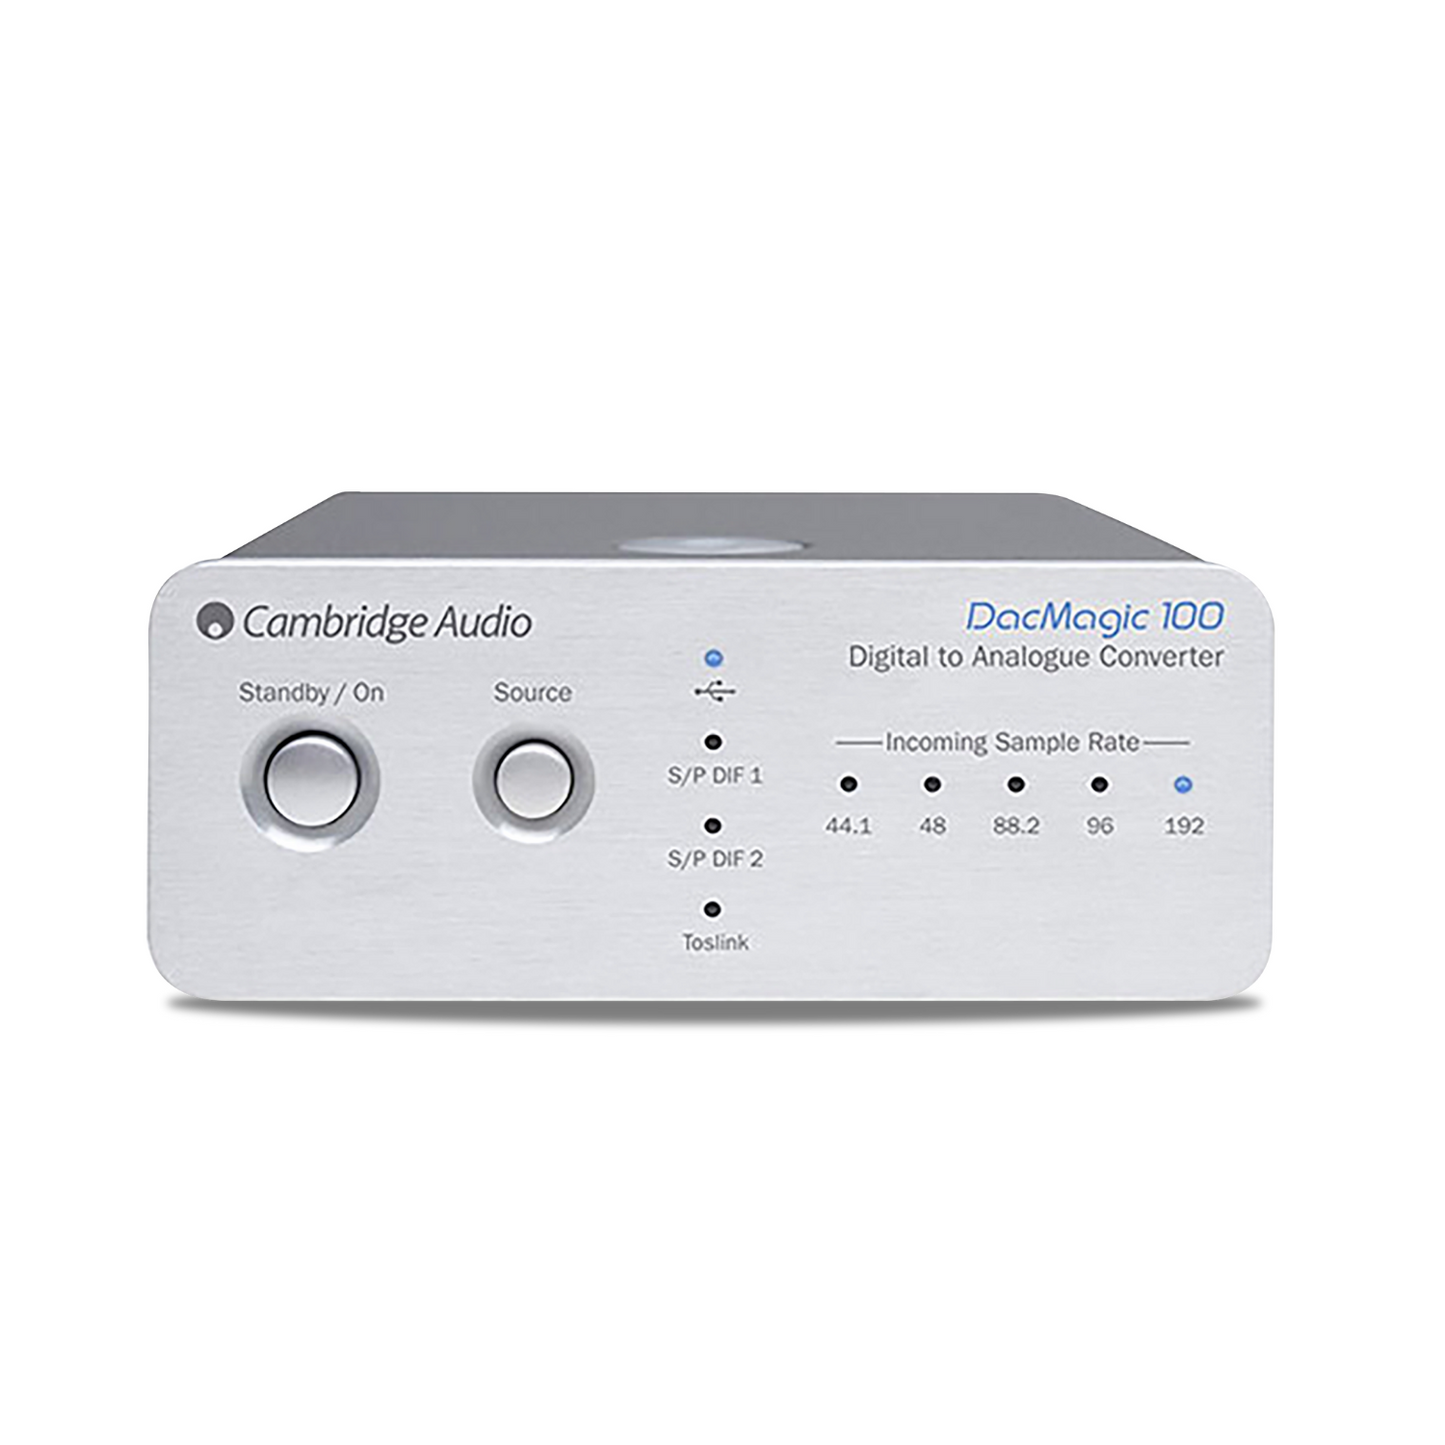 Cambridge Audio DacMagic 100 Digital to Analog Convertor